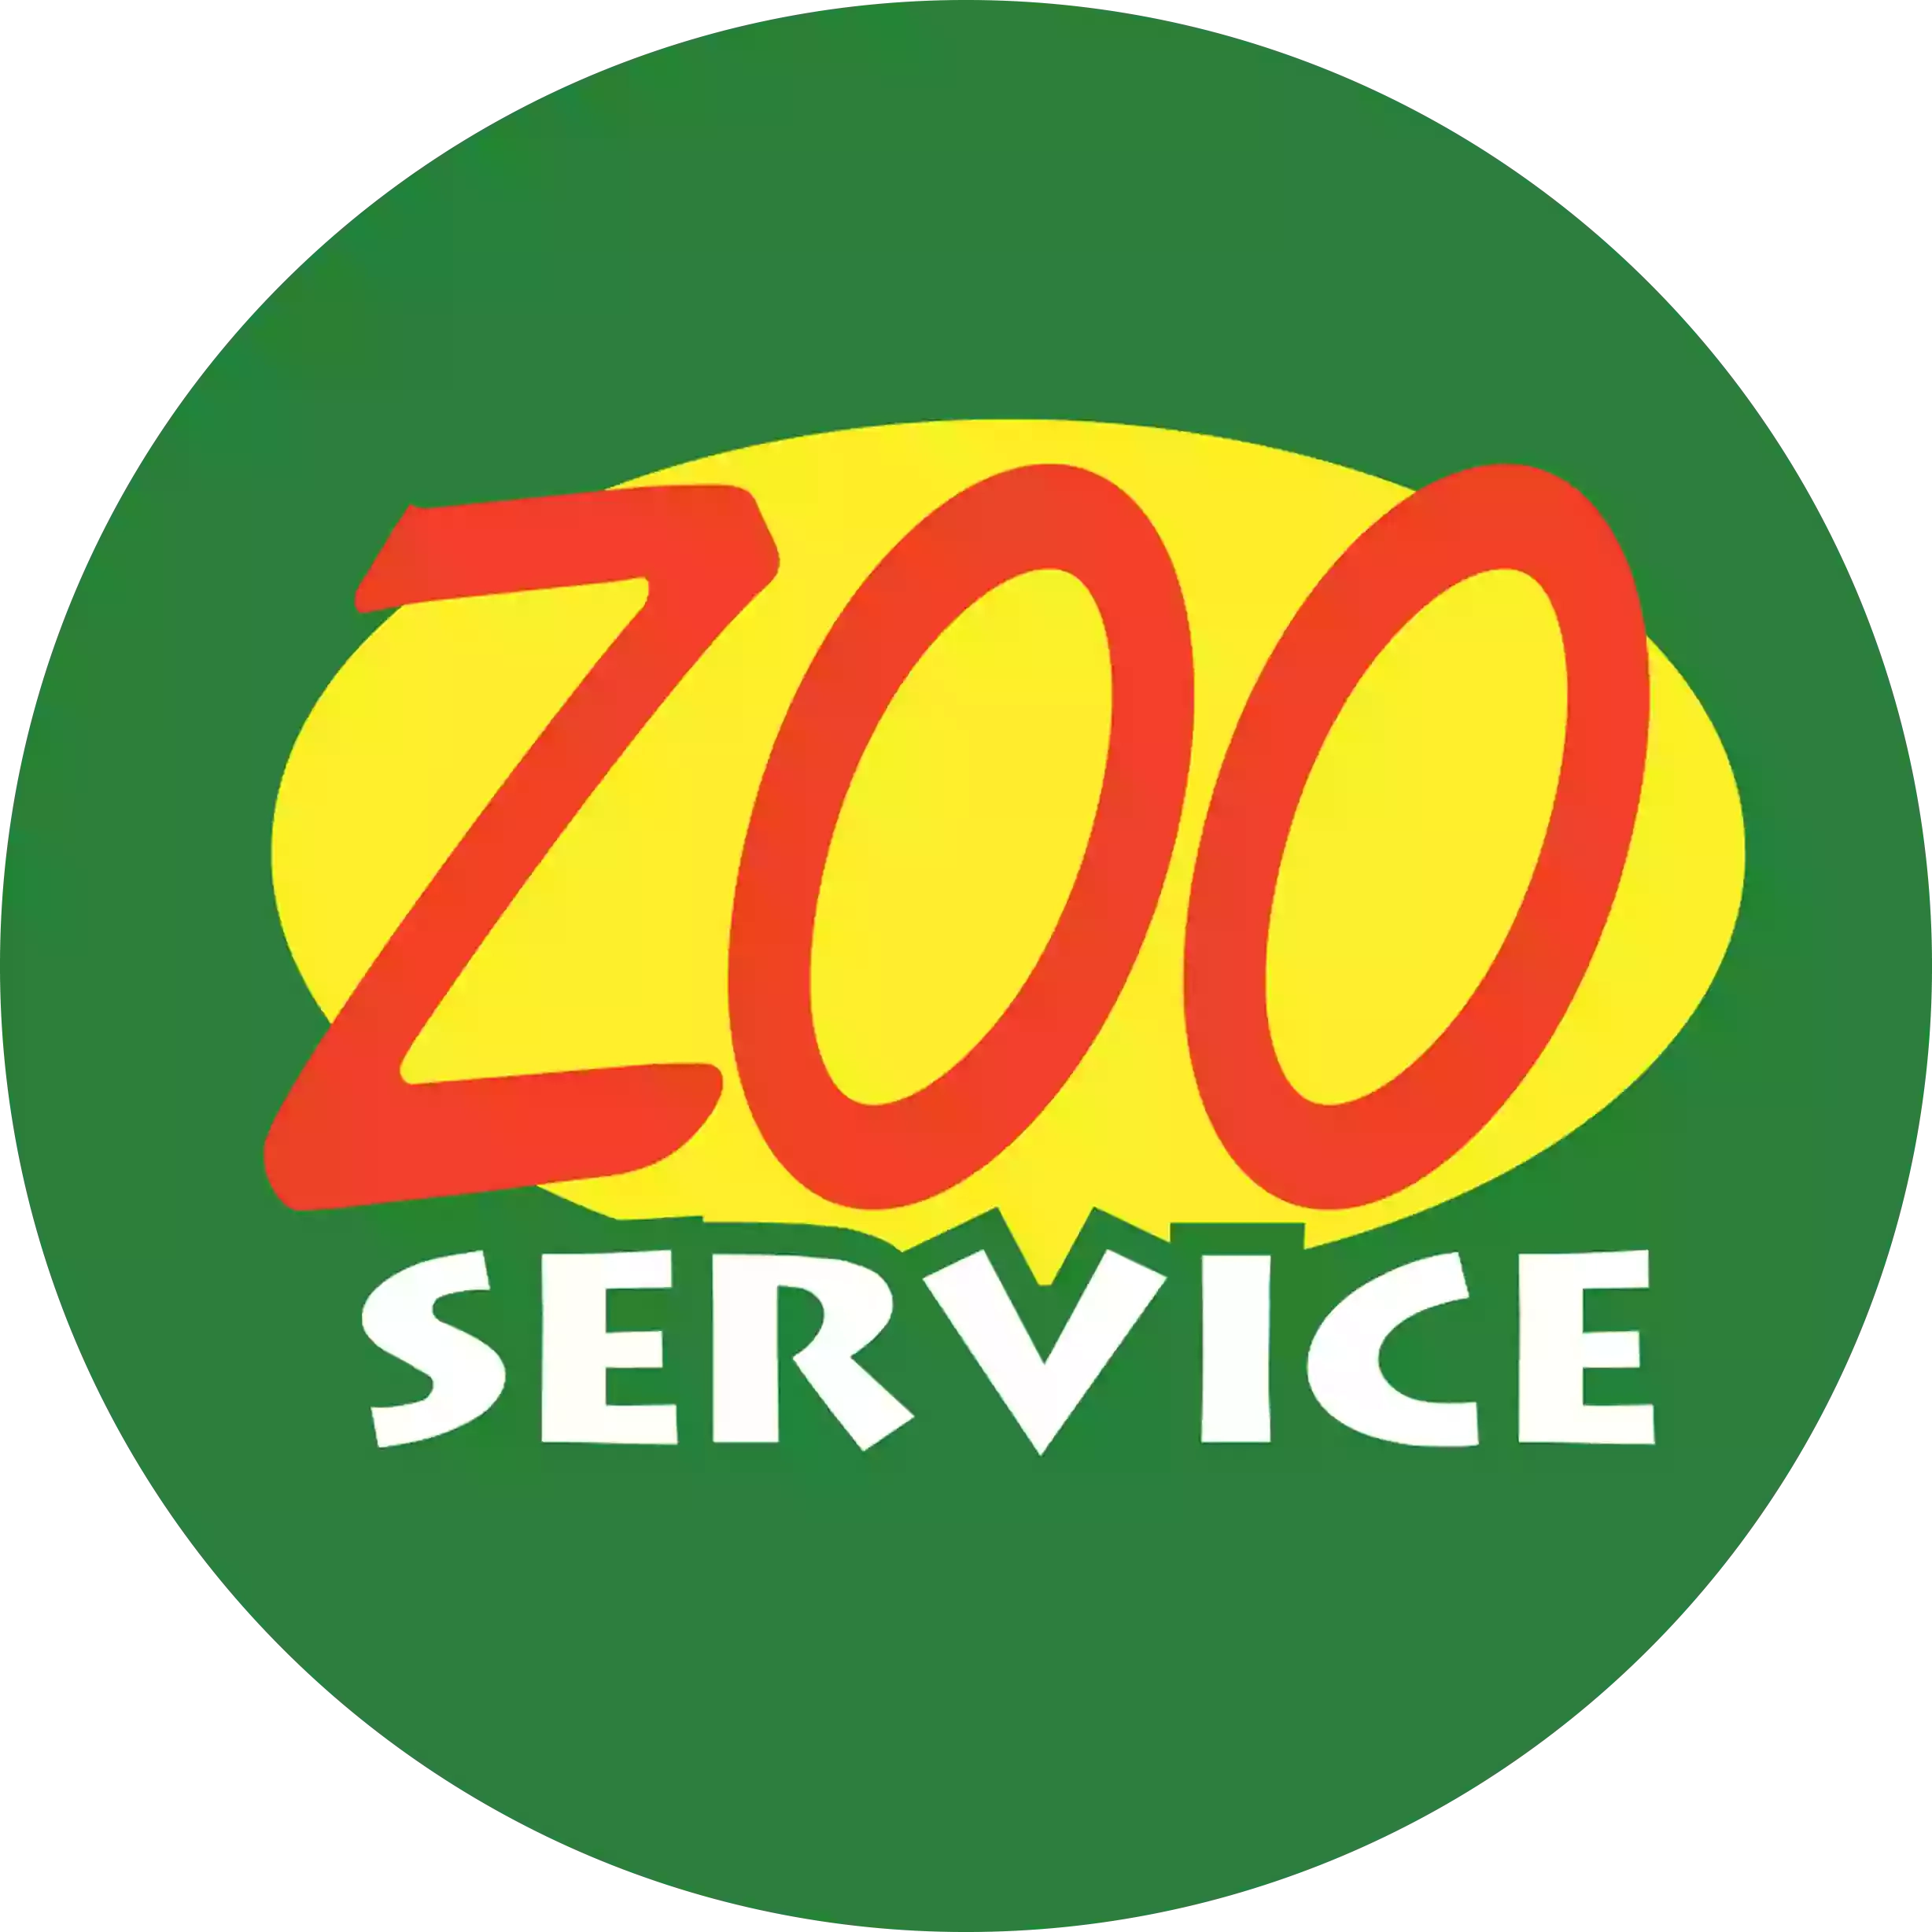 Zoo Service - Duca Della Verdura